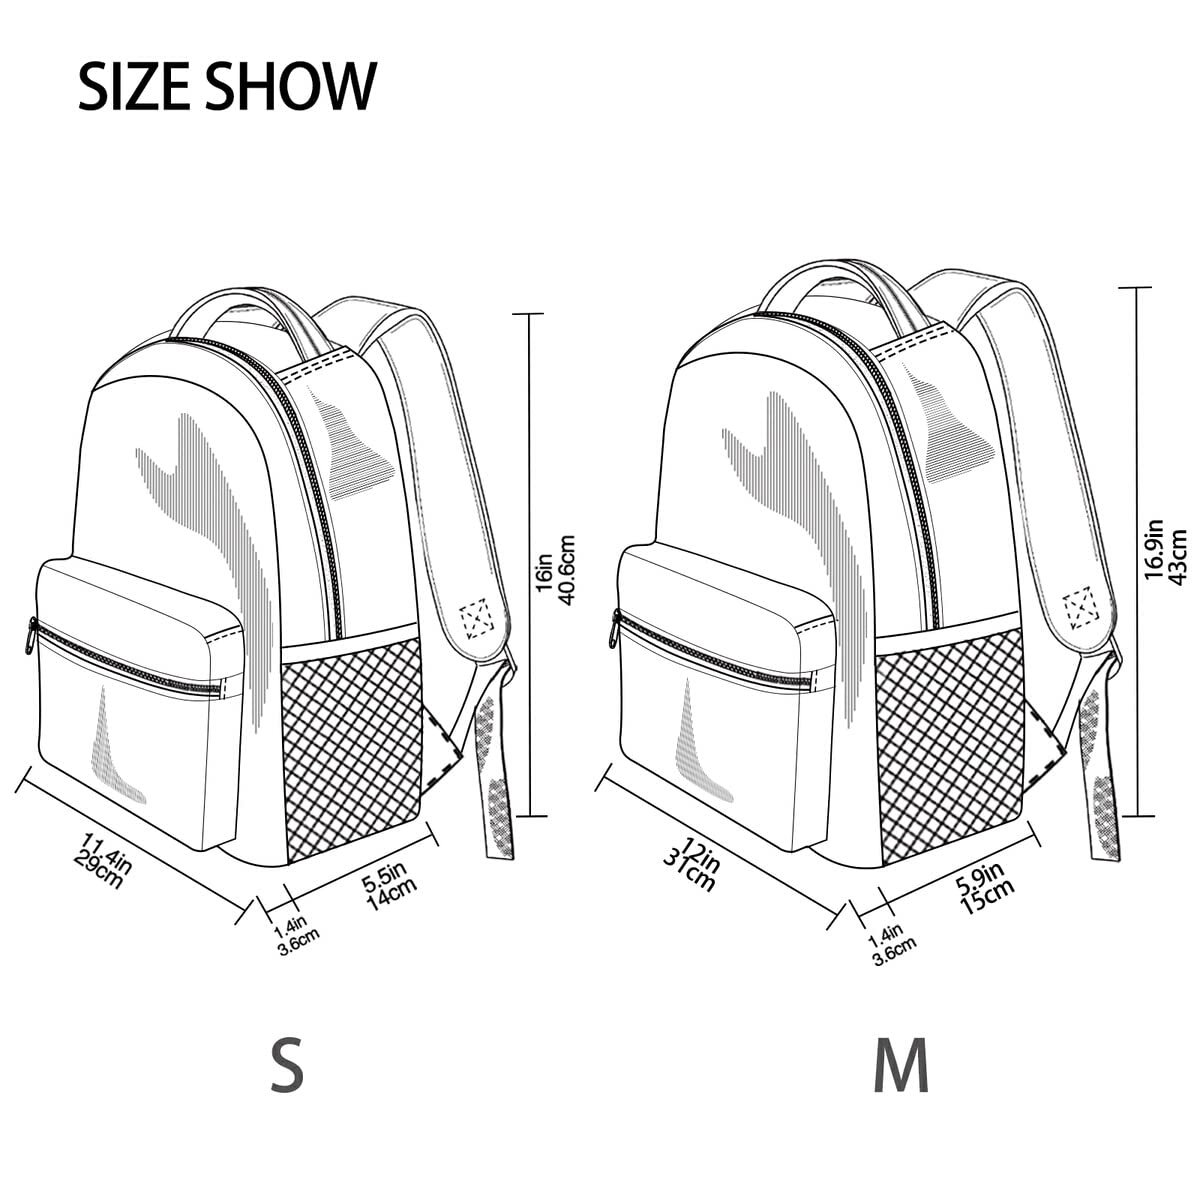 Backpack School Bookbag Travel Bag Truck Childish Cartoon for Girls Boys Teen